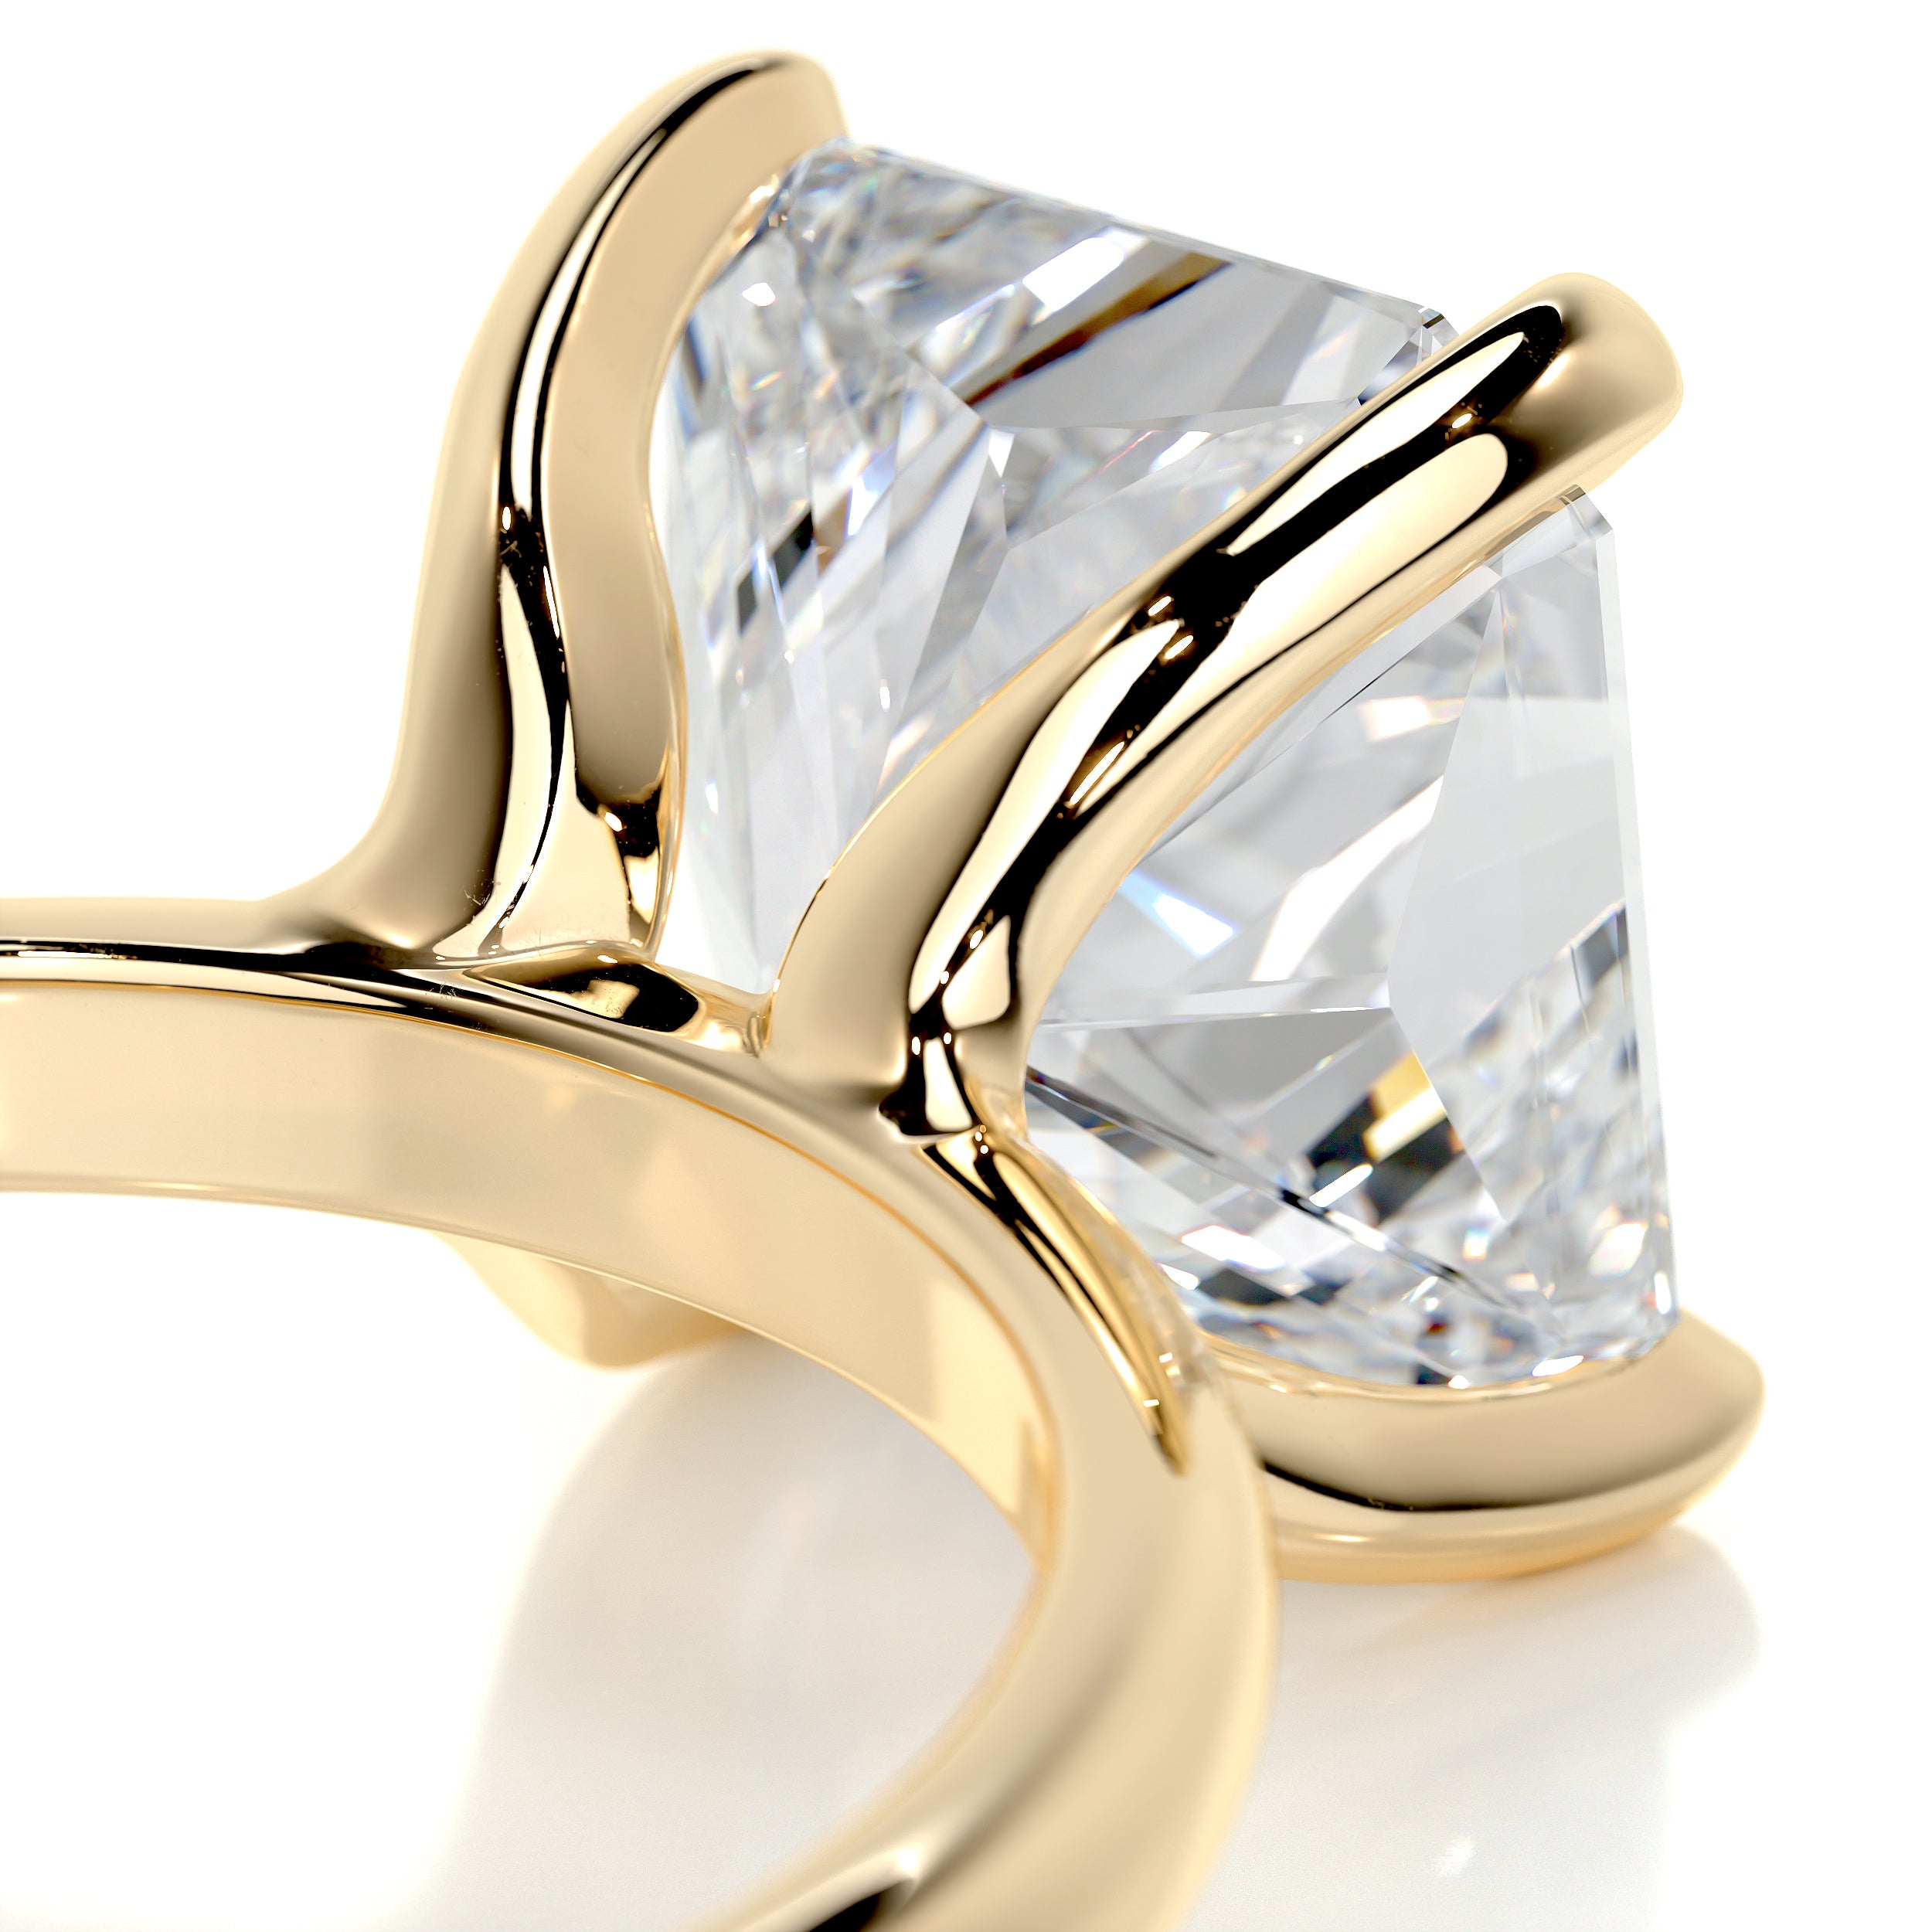 Julianna Diamond Engagement Ring   (3 Carat) -18K Yellow Gold